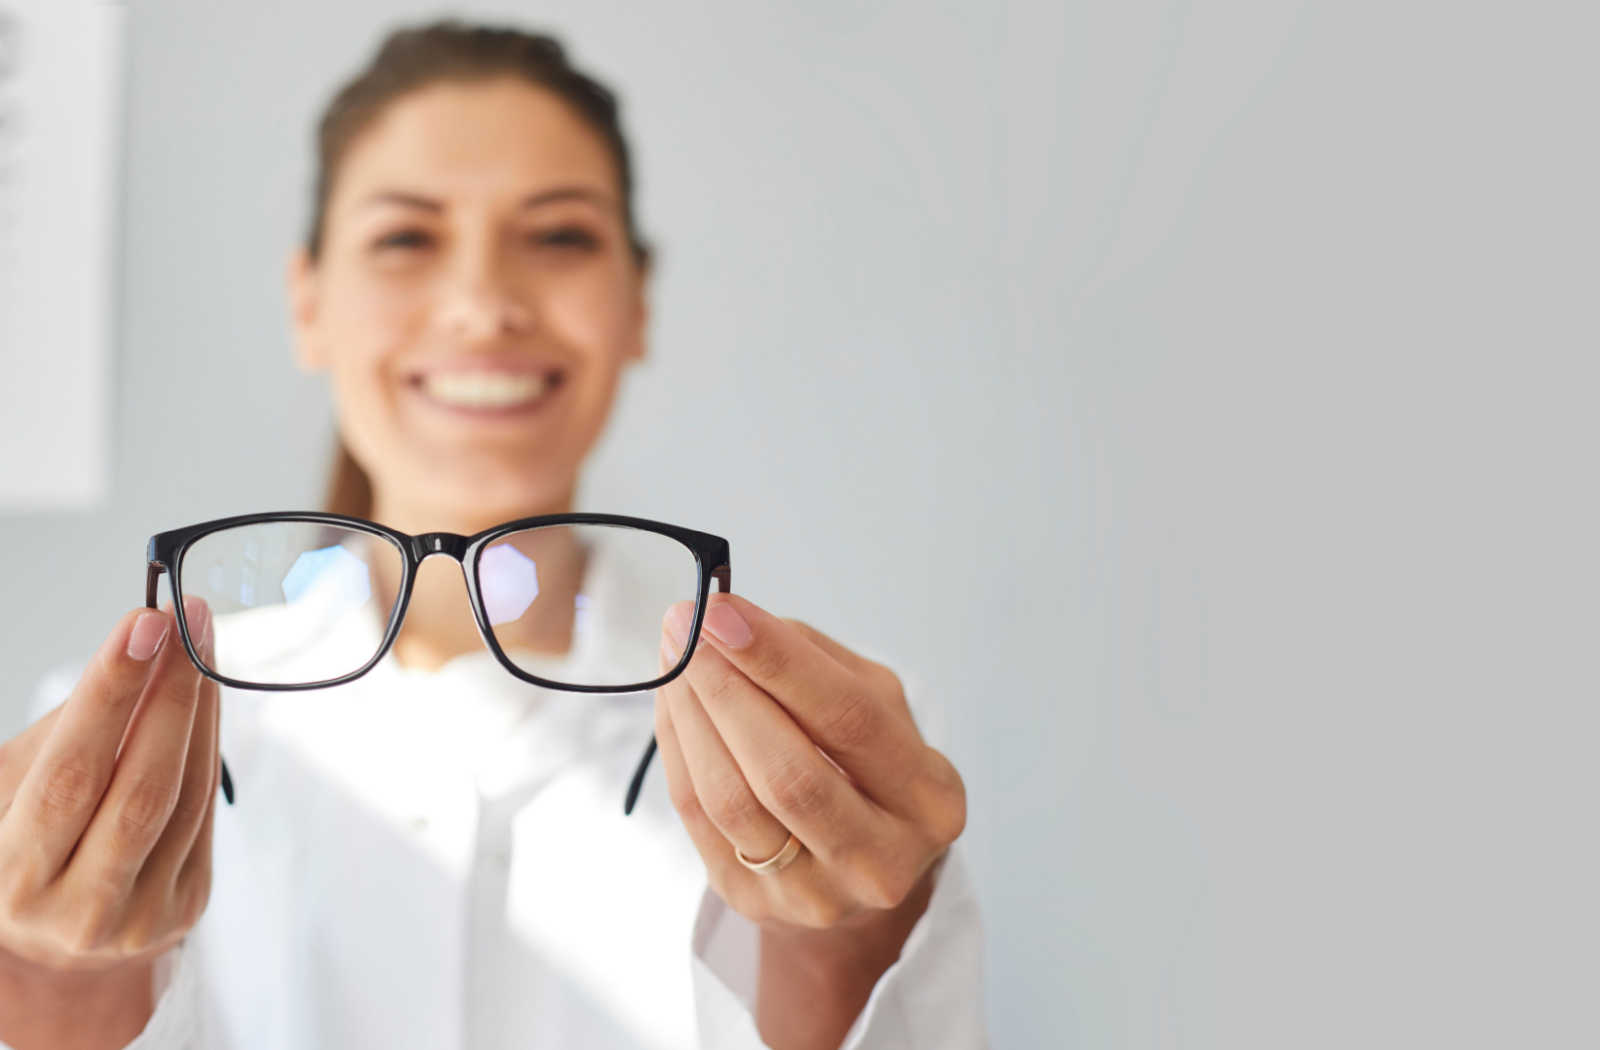 An optometrist smiling and holding a prescription eyeglass